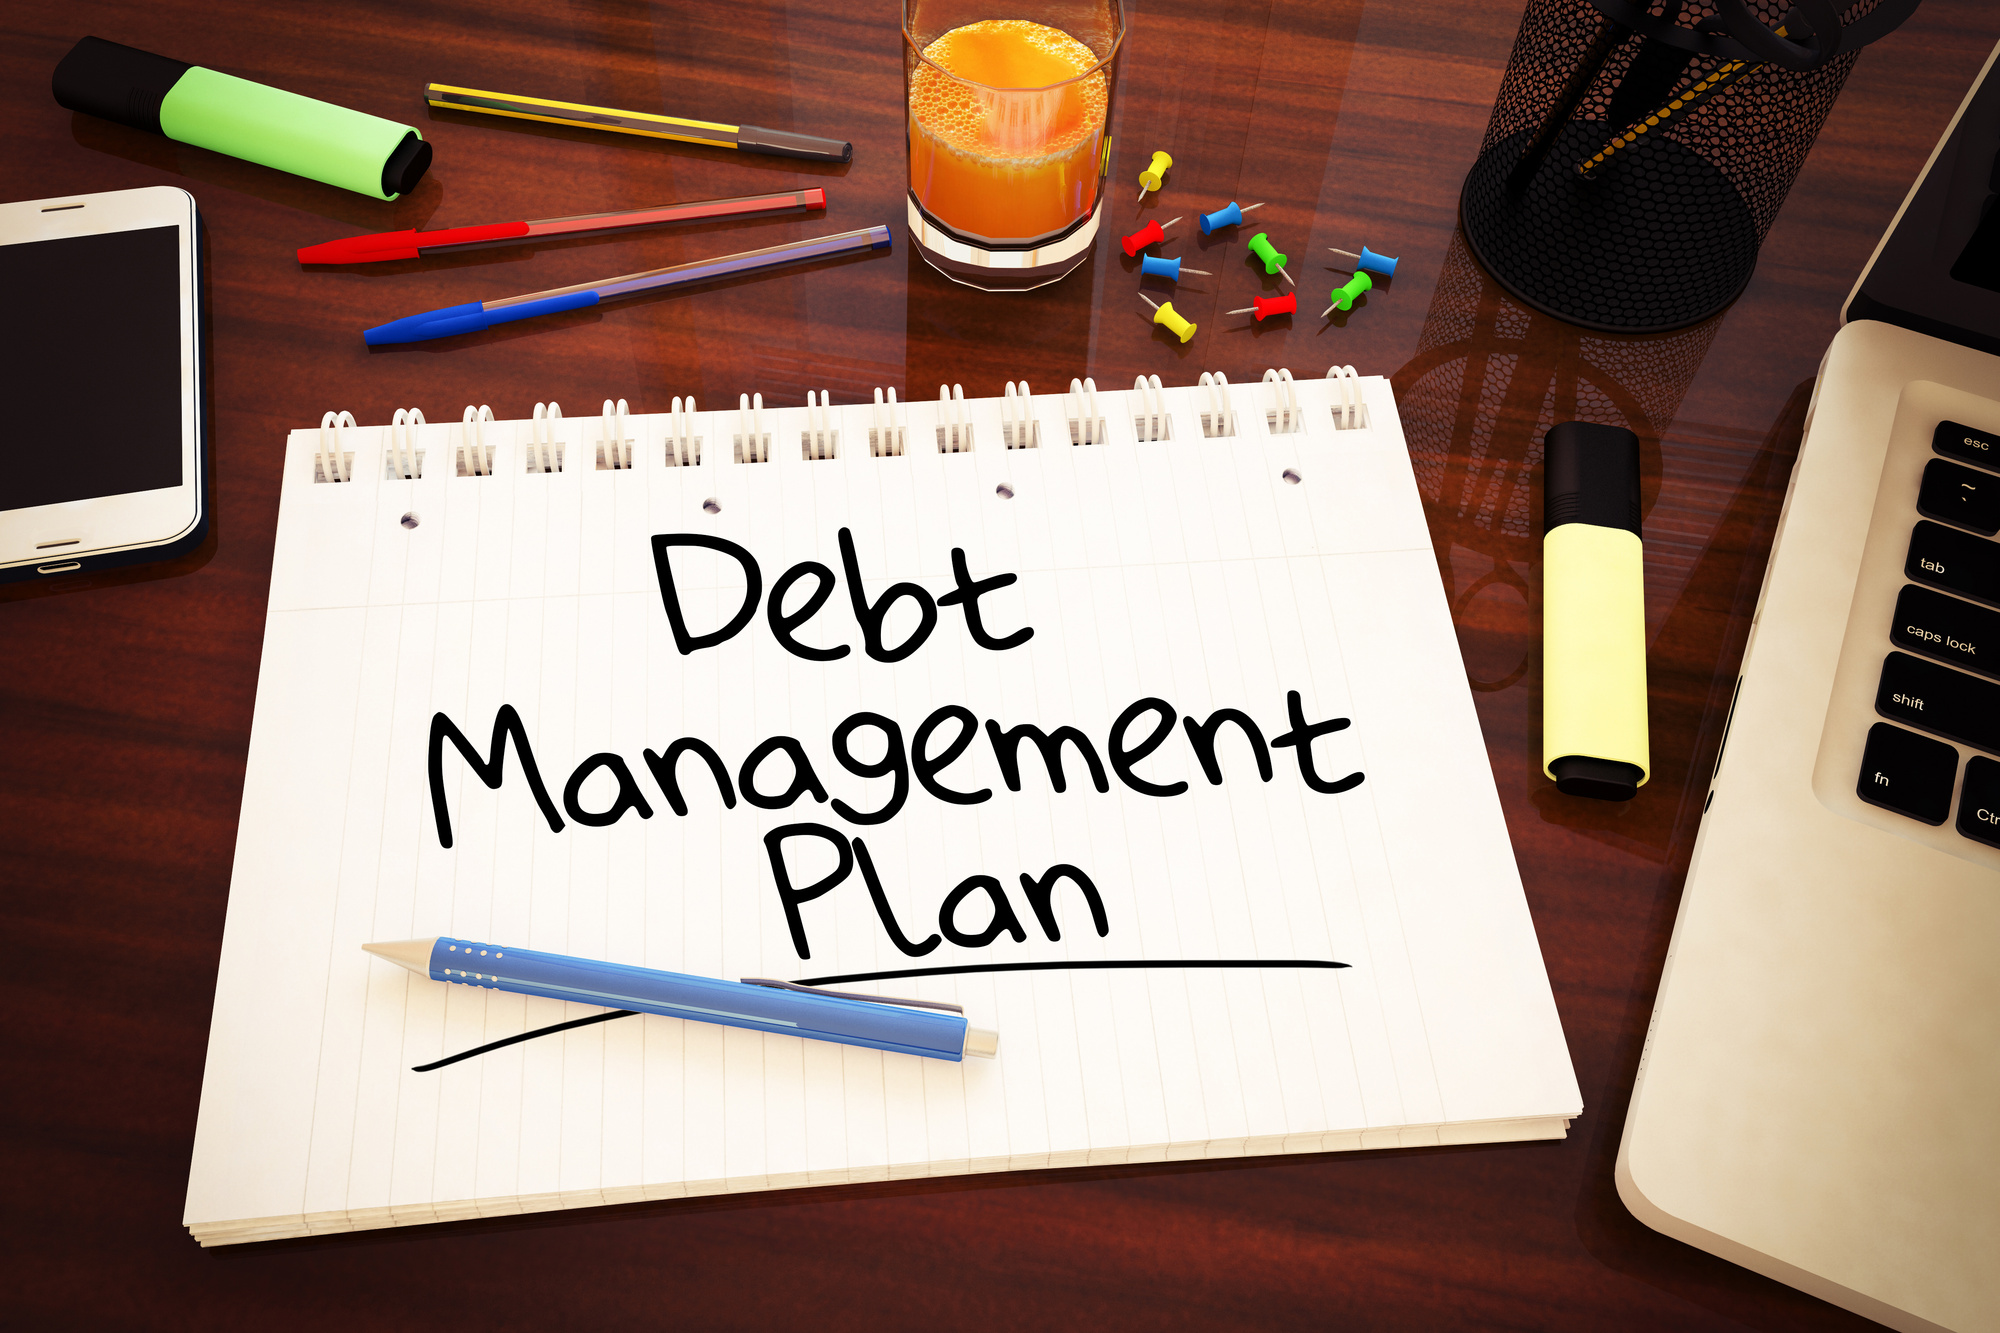 debt management company business plan